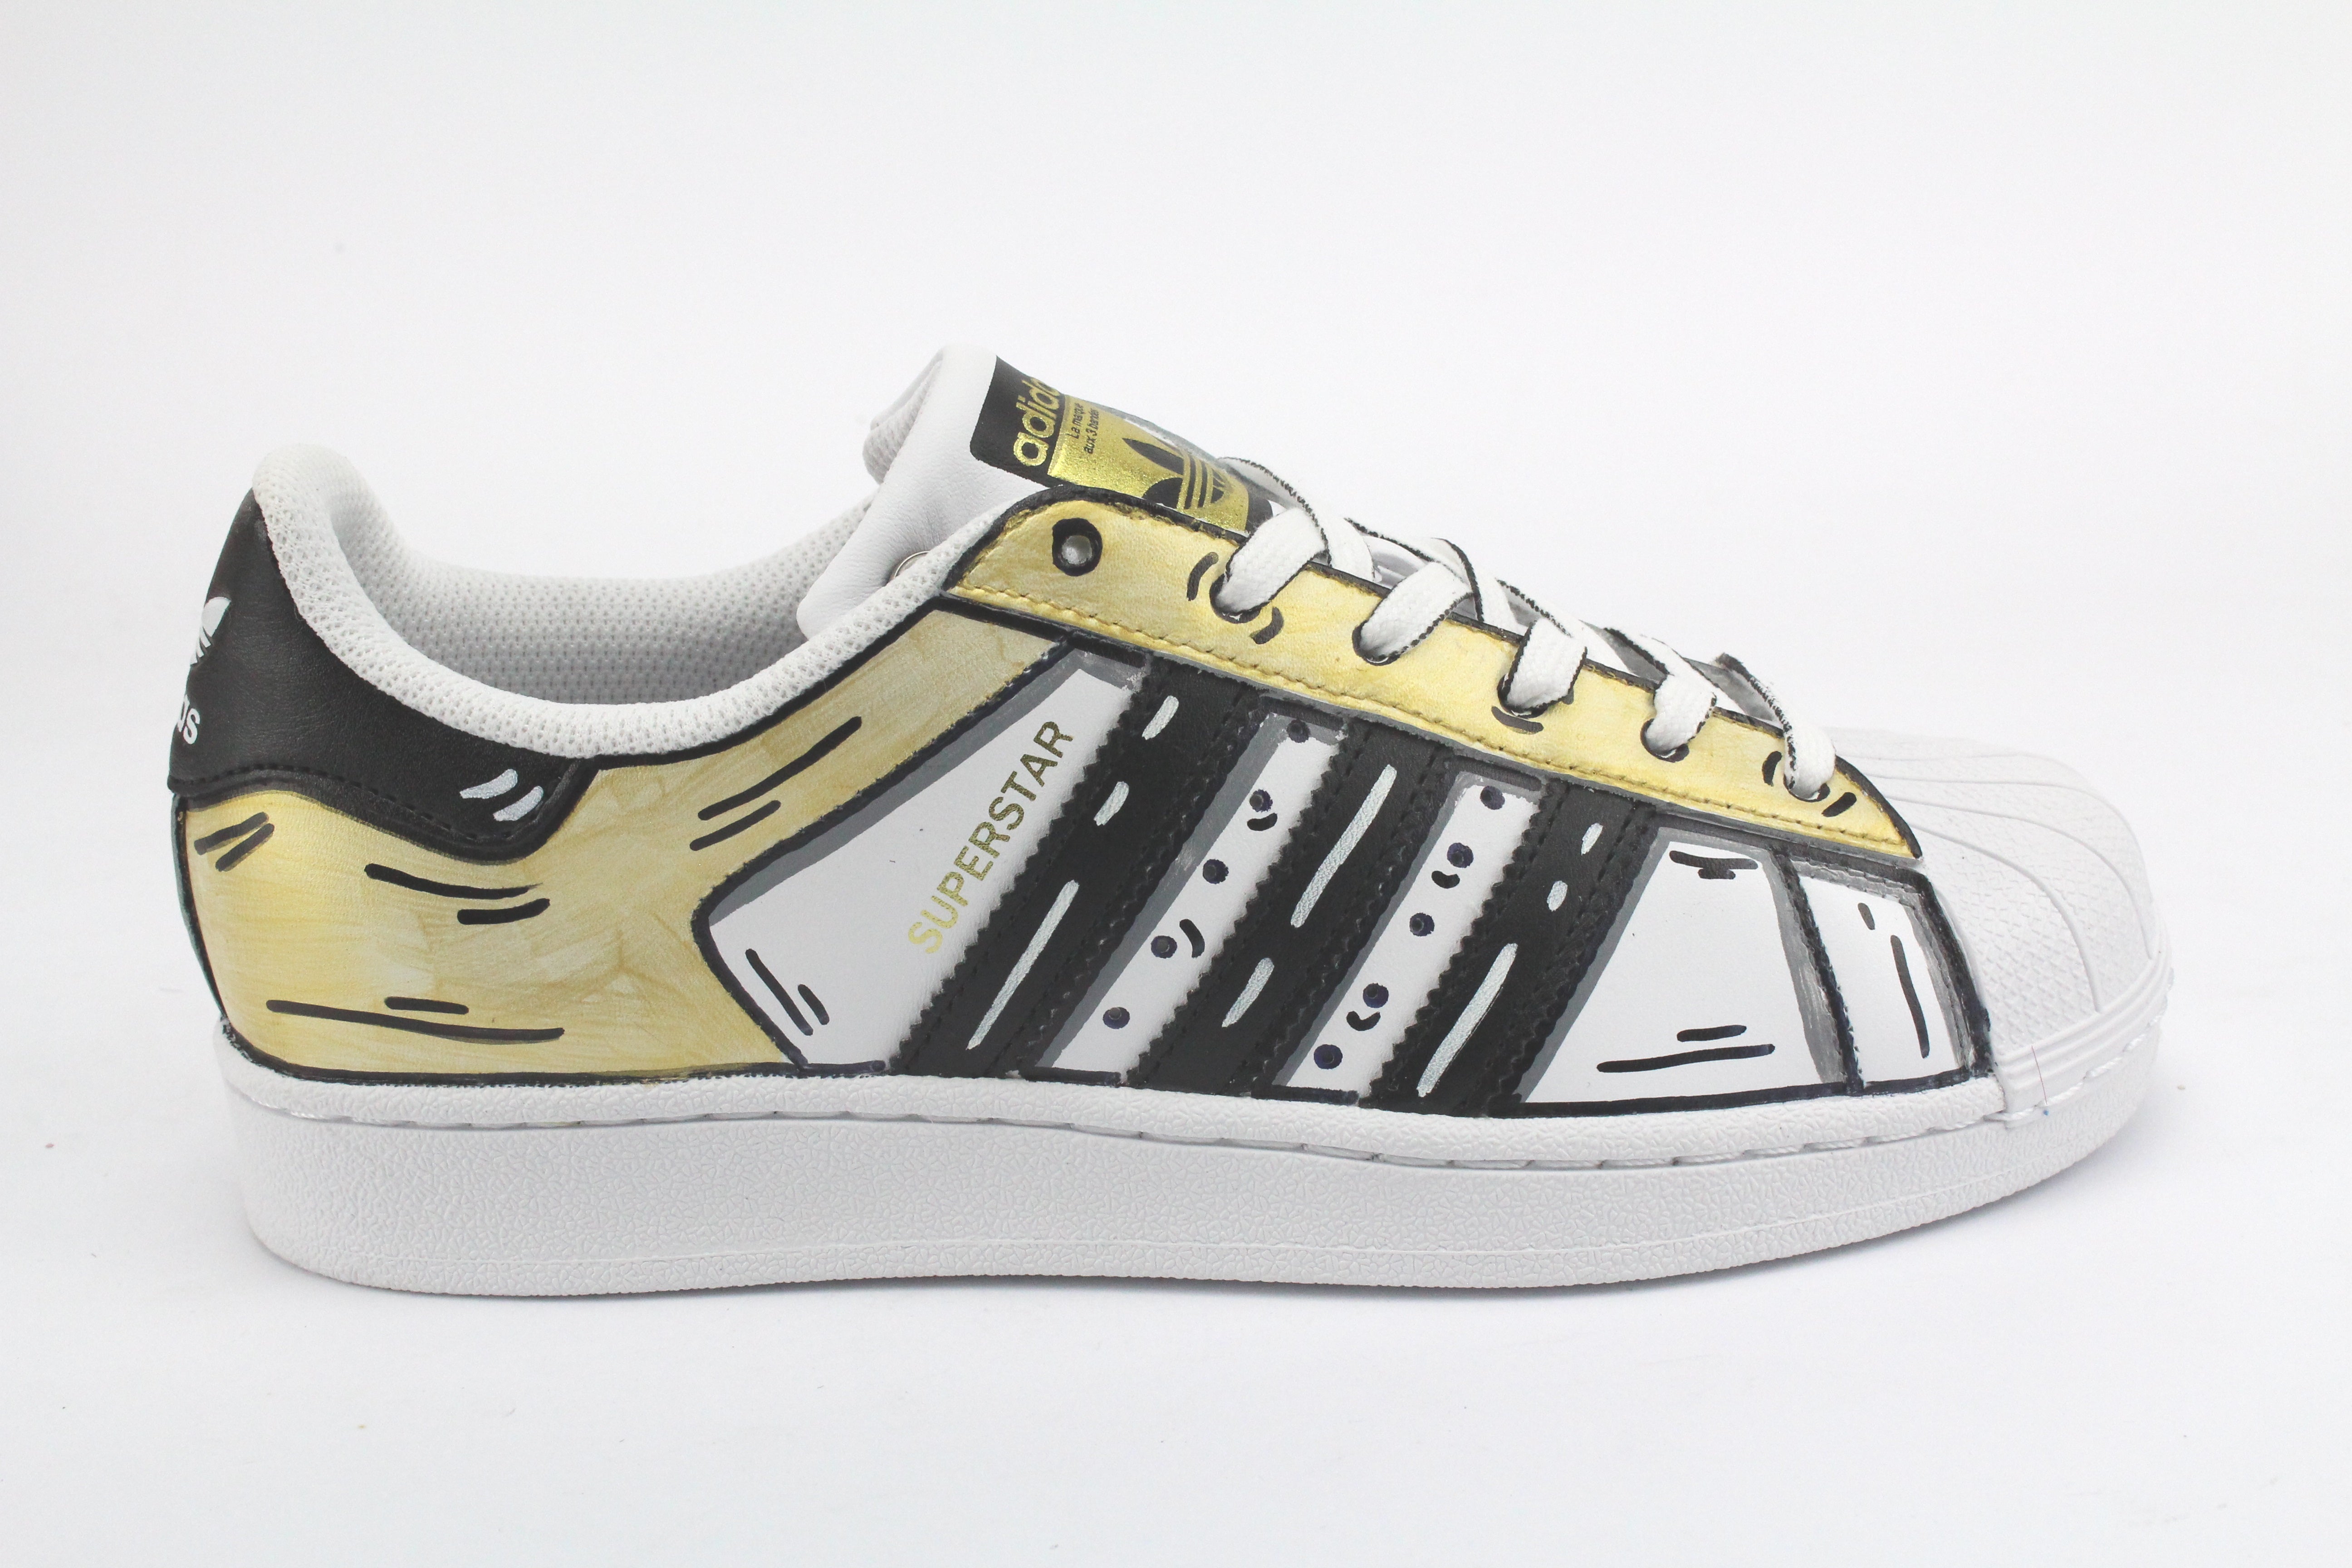 Adidas Superstar Cartoon Gold and cartoon laces